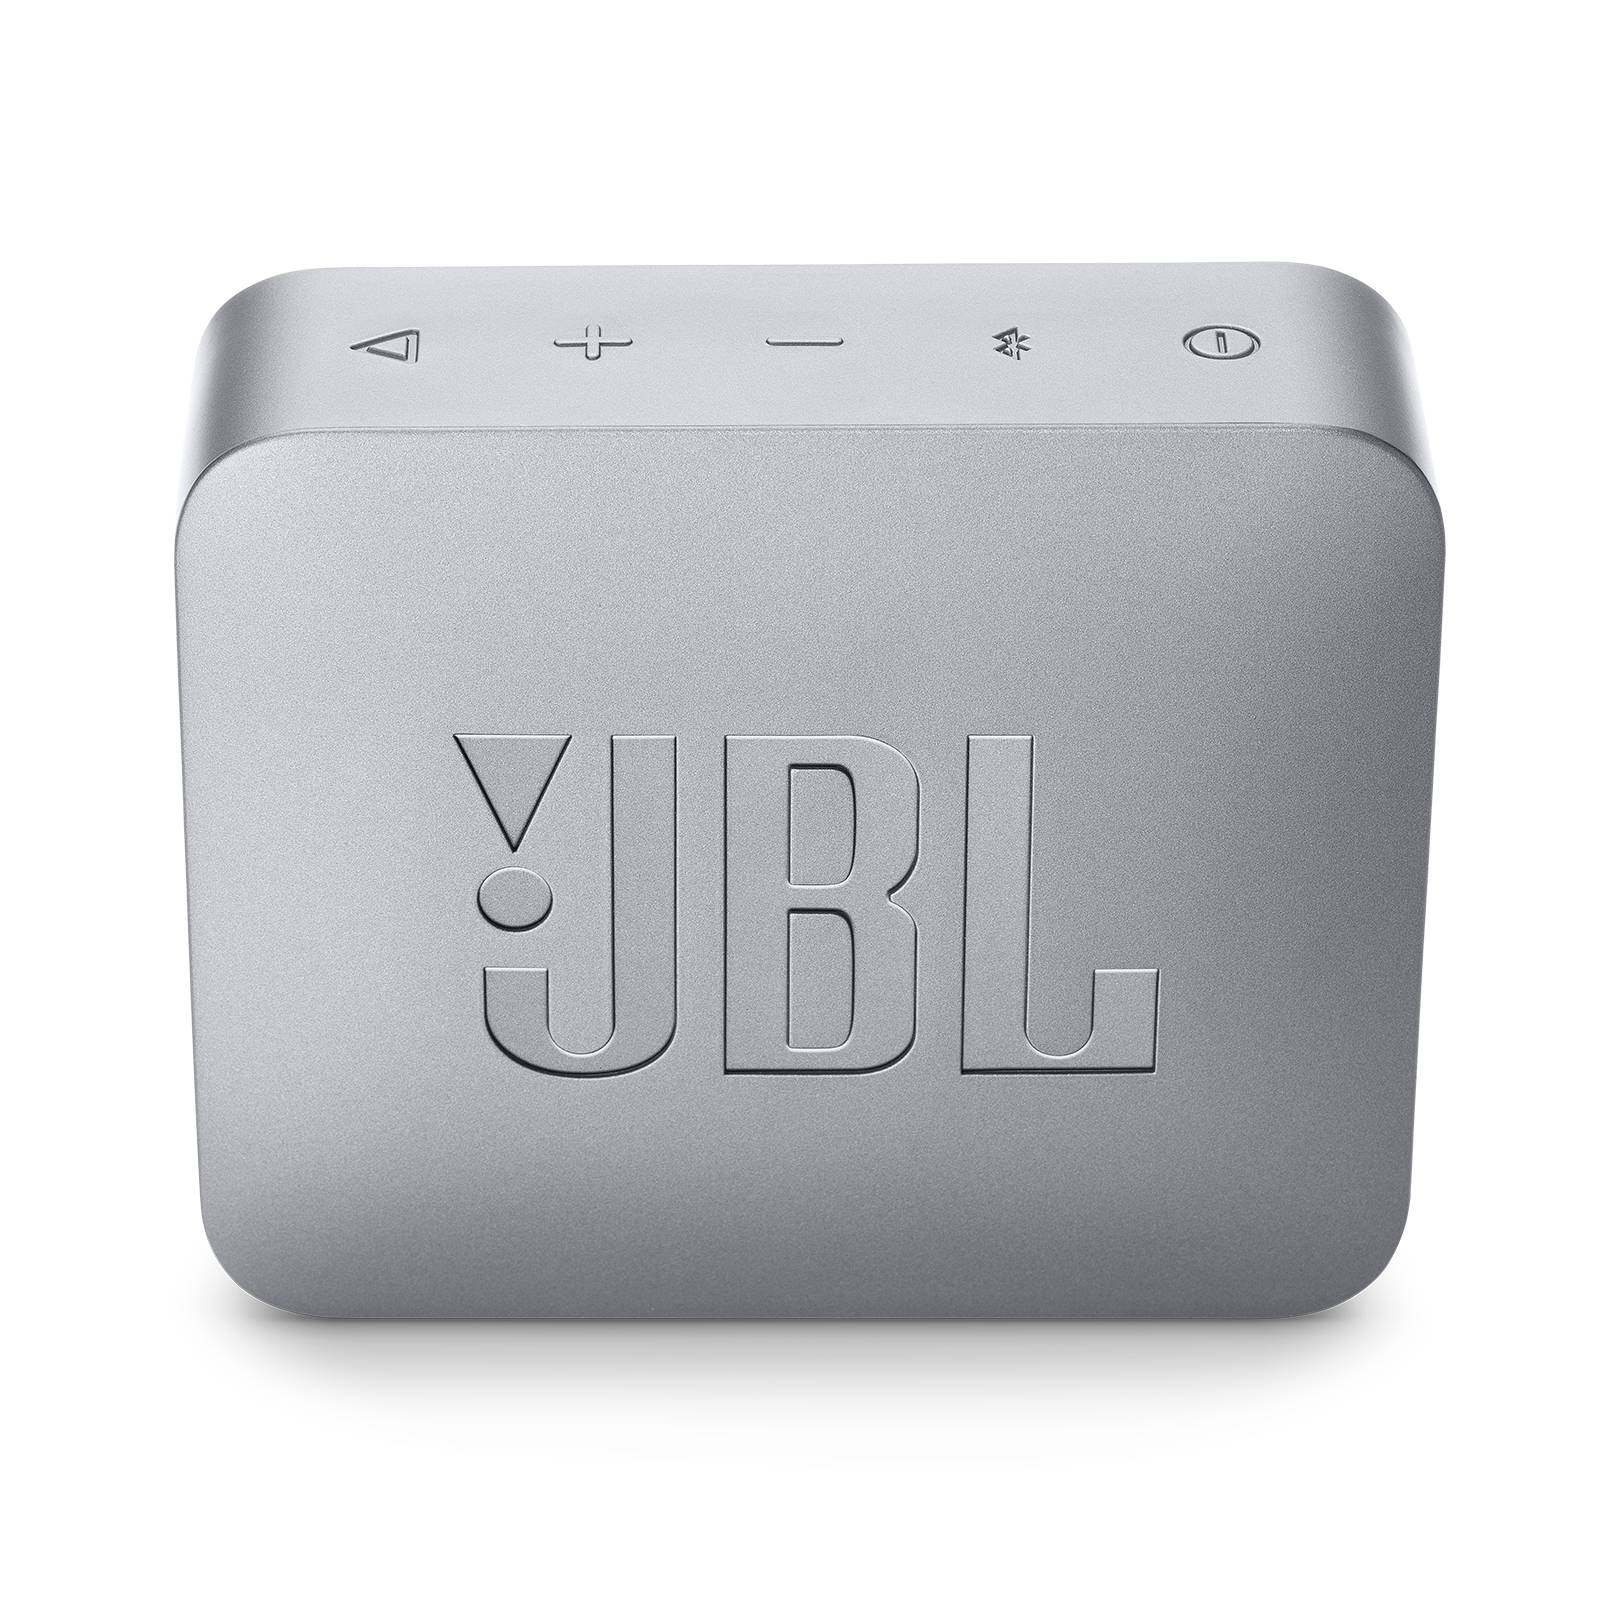 JBL GO 2 Portable Bluetooth Speaker with 5 Hours of Playtime, Waterproof